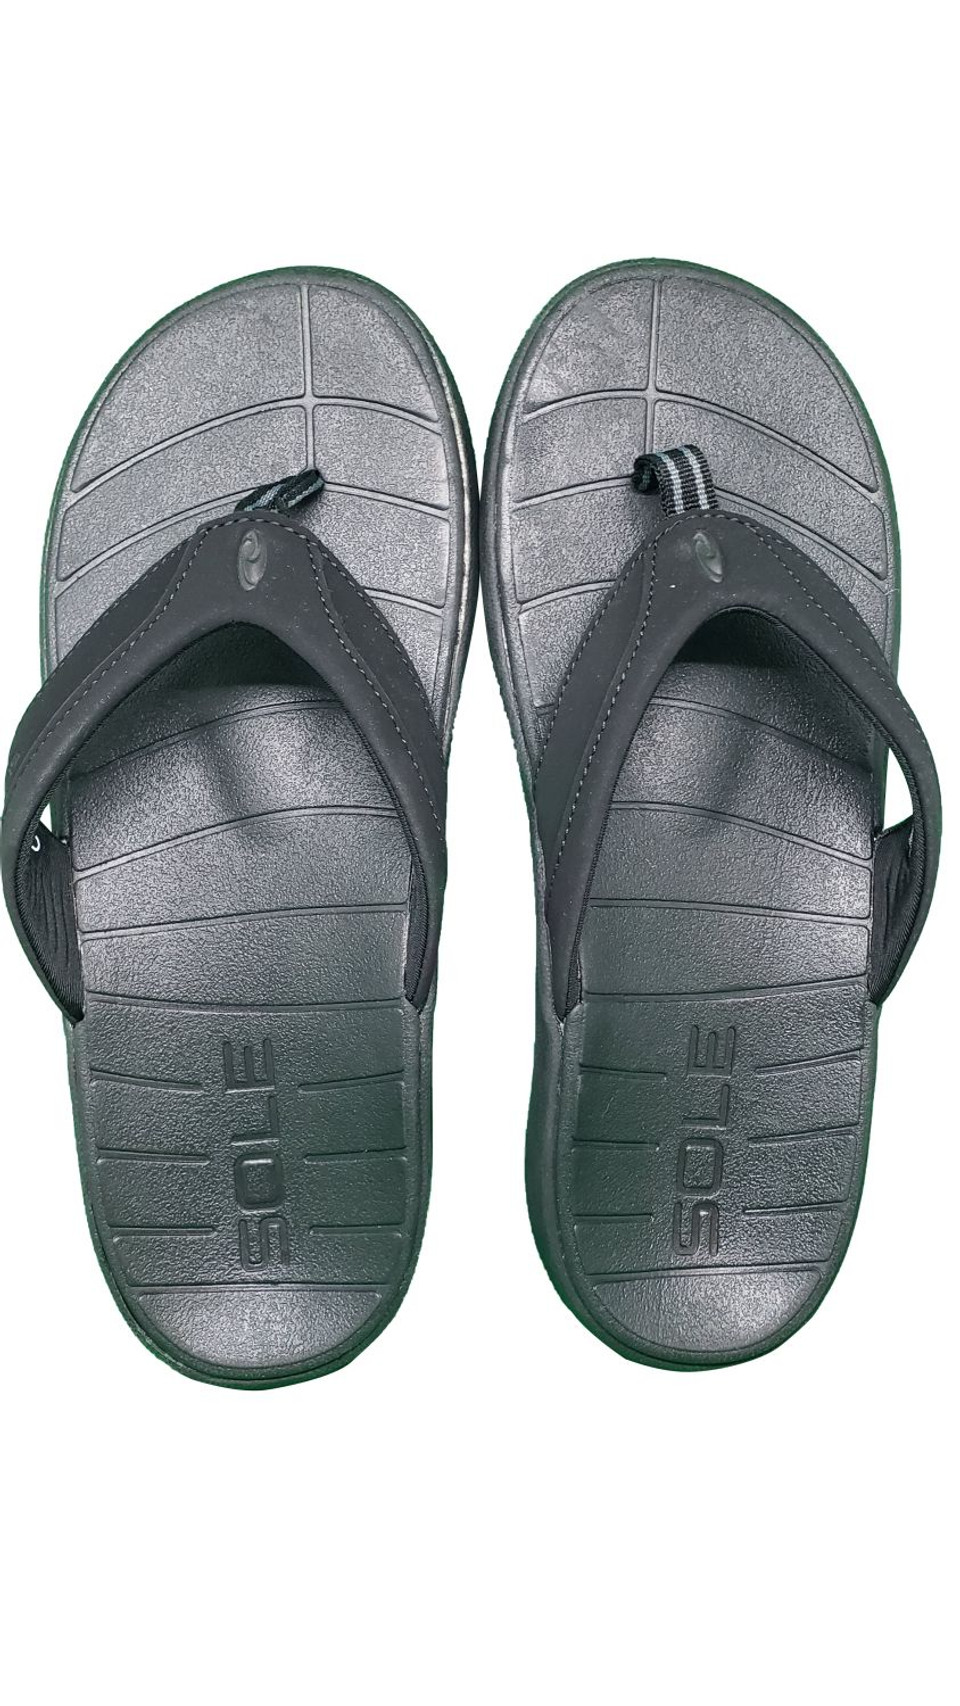 SOLE Sport Women's Flip Flop Sandals w/ Moldable Footbed | Orthotic Shop